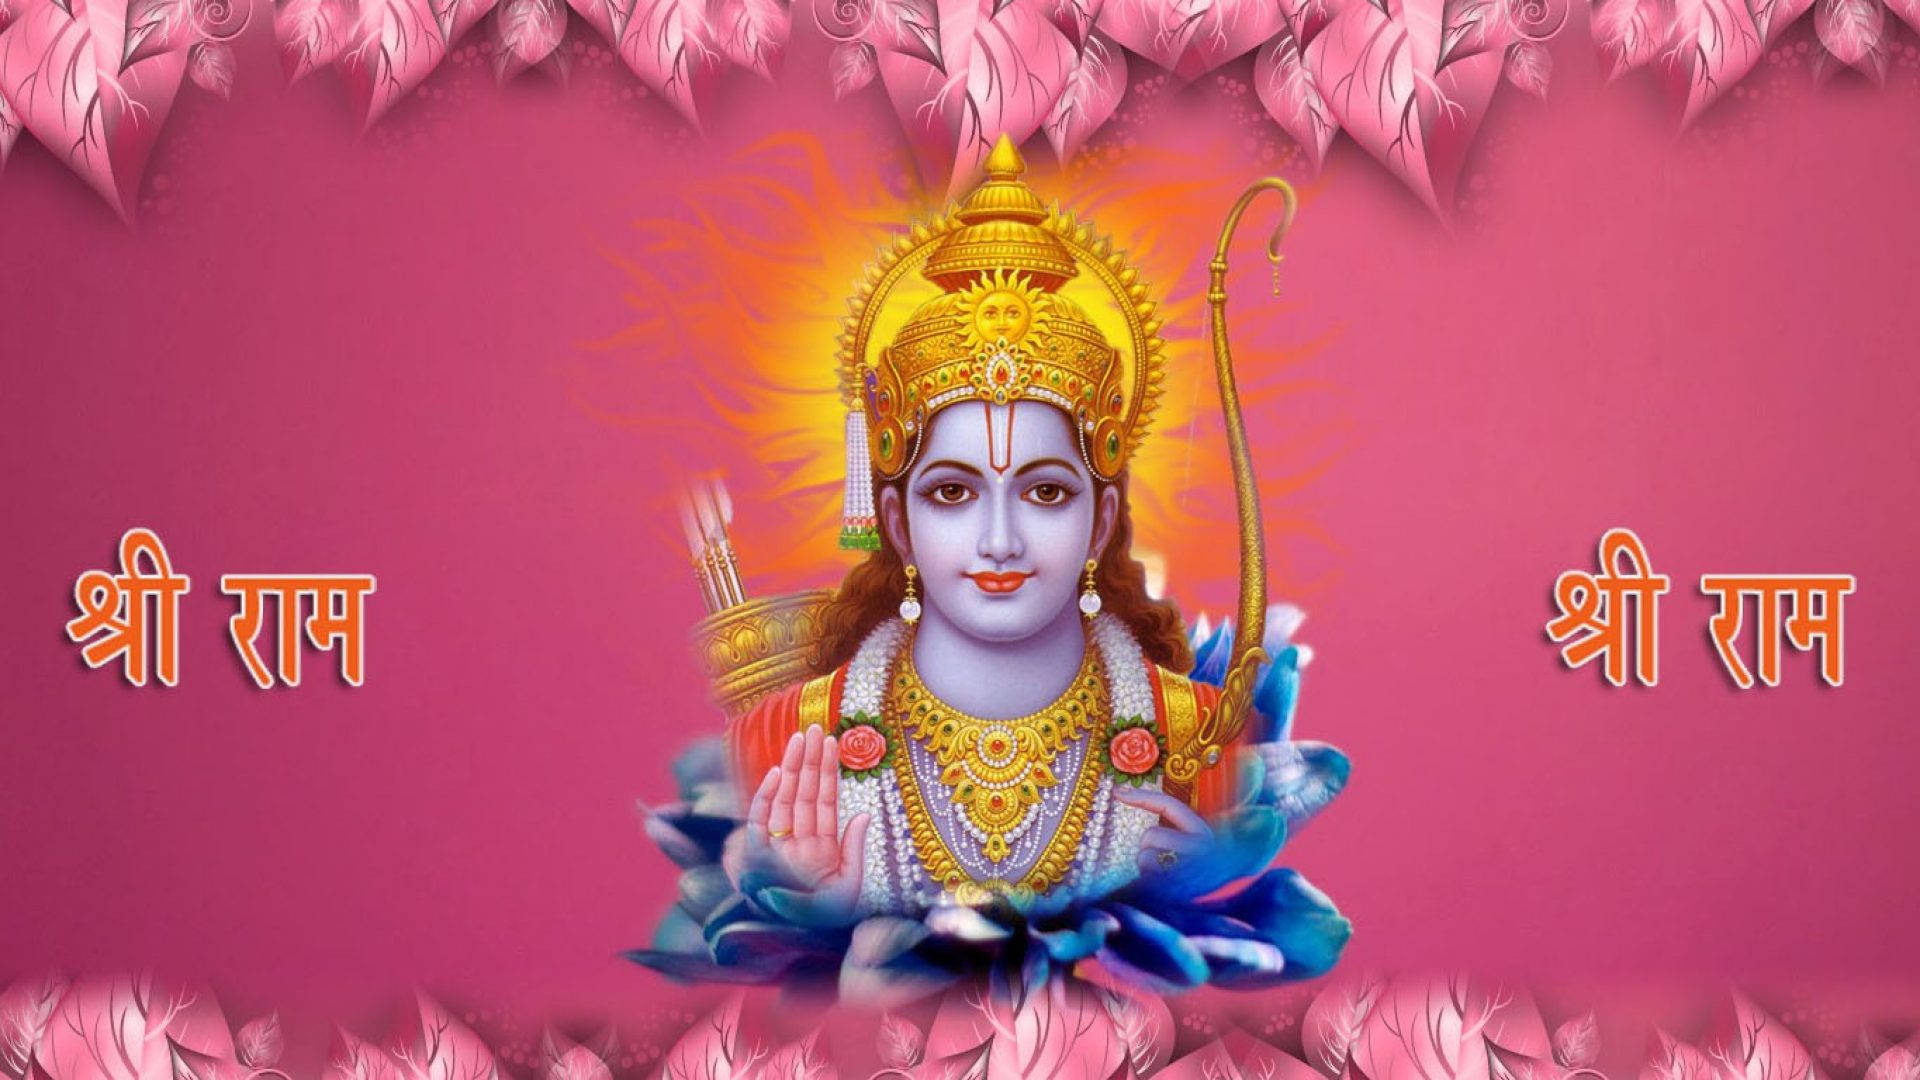 Hindugott Ram Ji In Pink Wallpaper